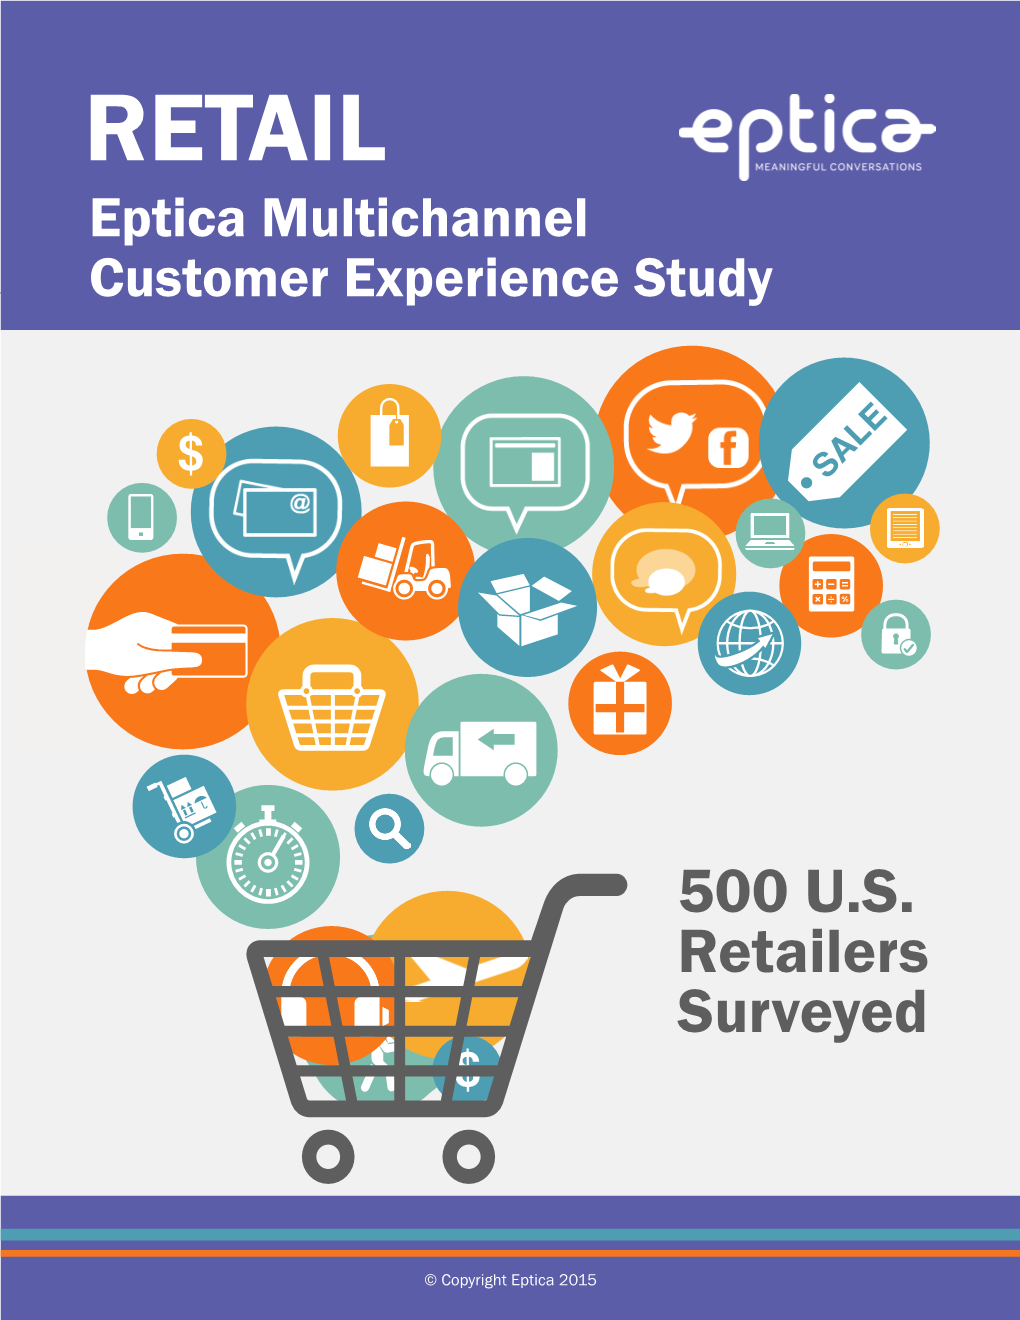 Eptica Multichannel Customer Experience Study